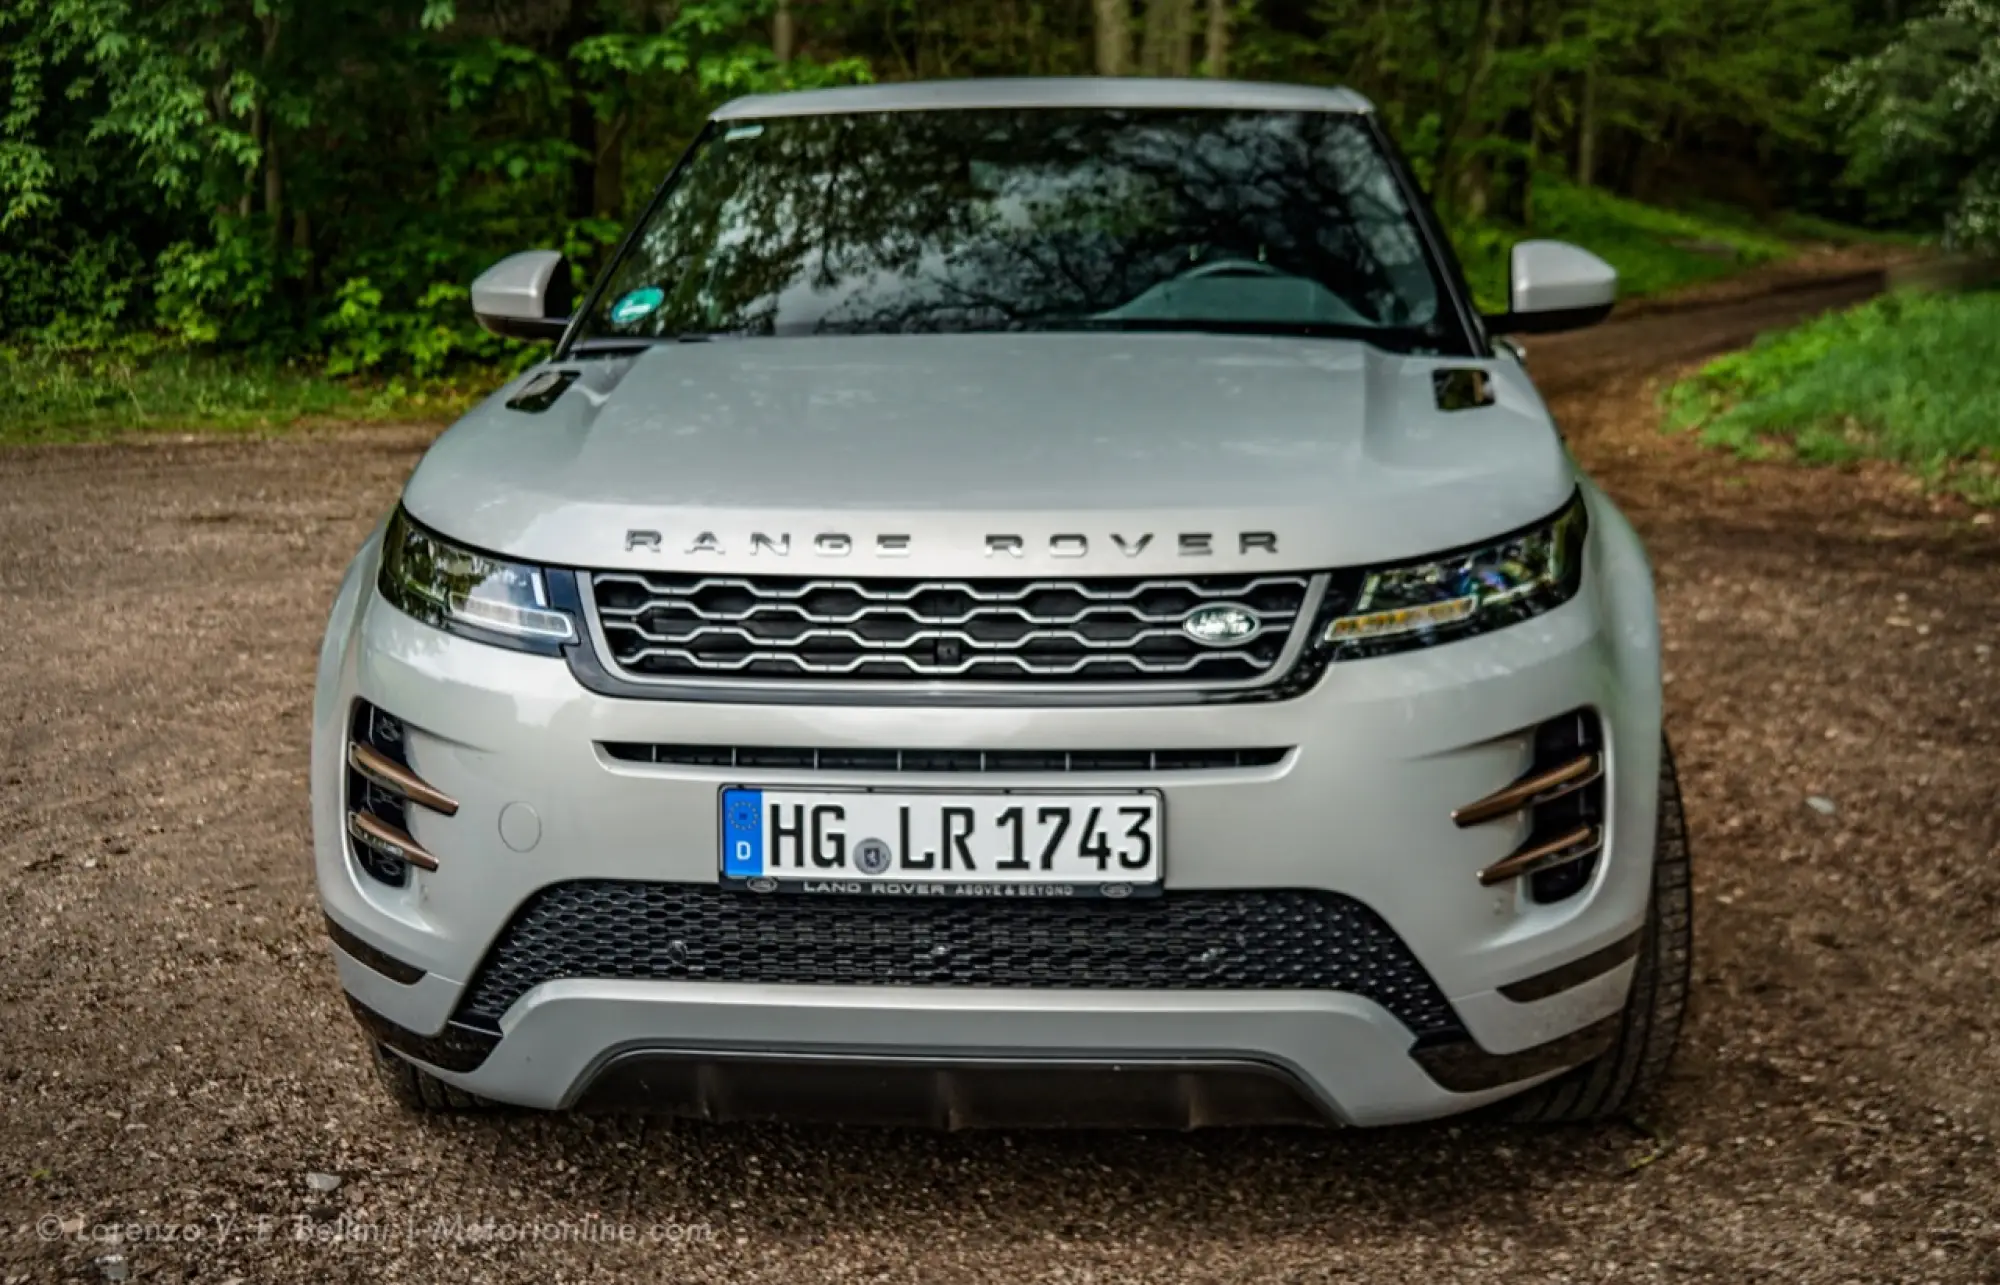 Nuova Range Rover Evoque 2019 - Test Drive in Anteprima - 4